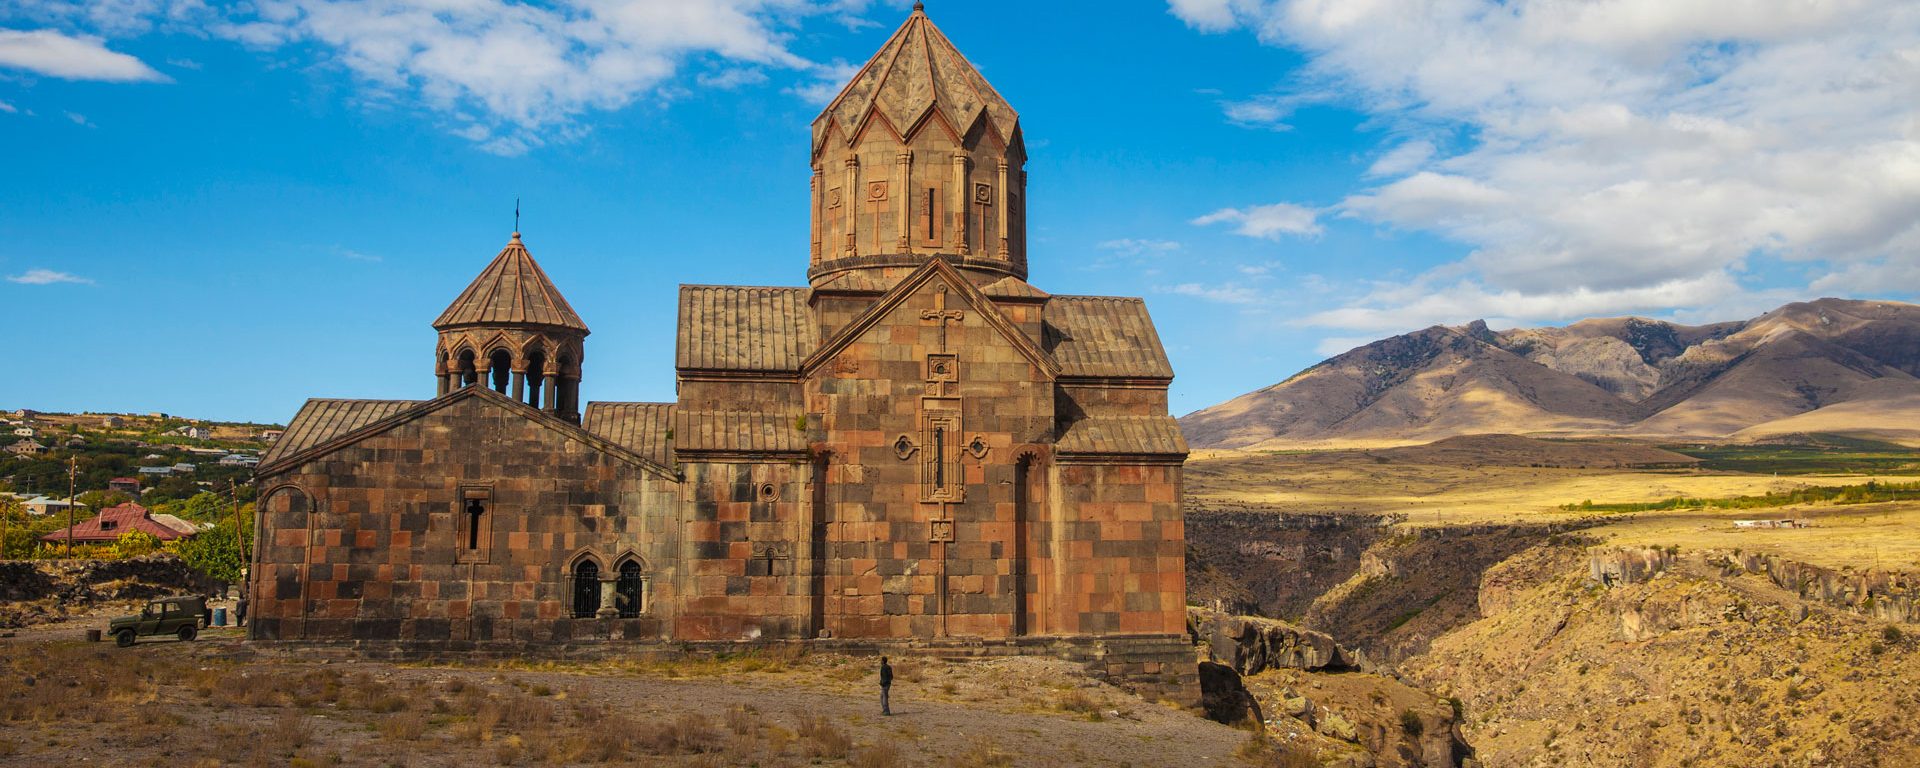 Hovhannavank church standing on the edge of the Qasakh River Canyon in Armenia, Caucasus